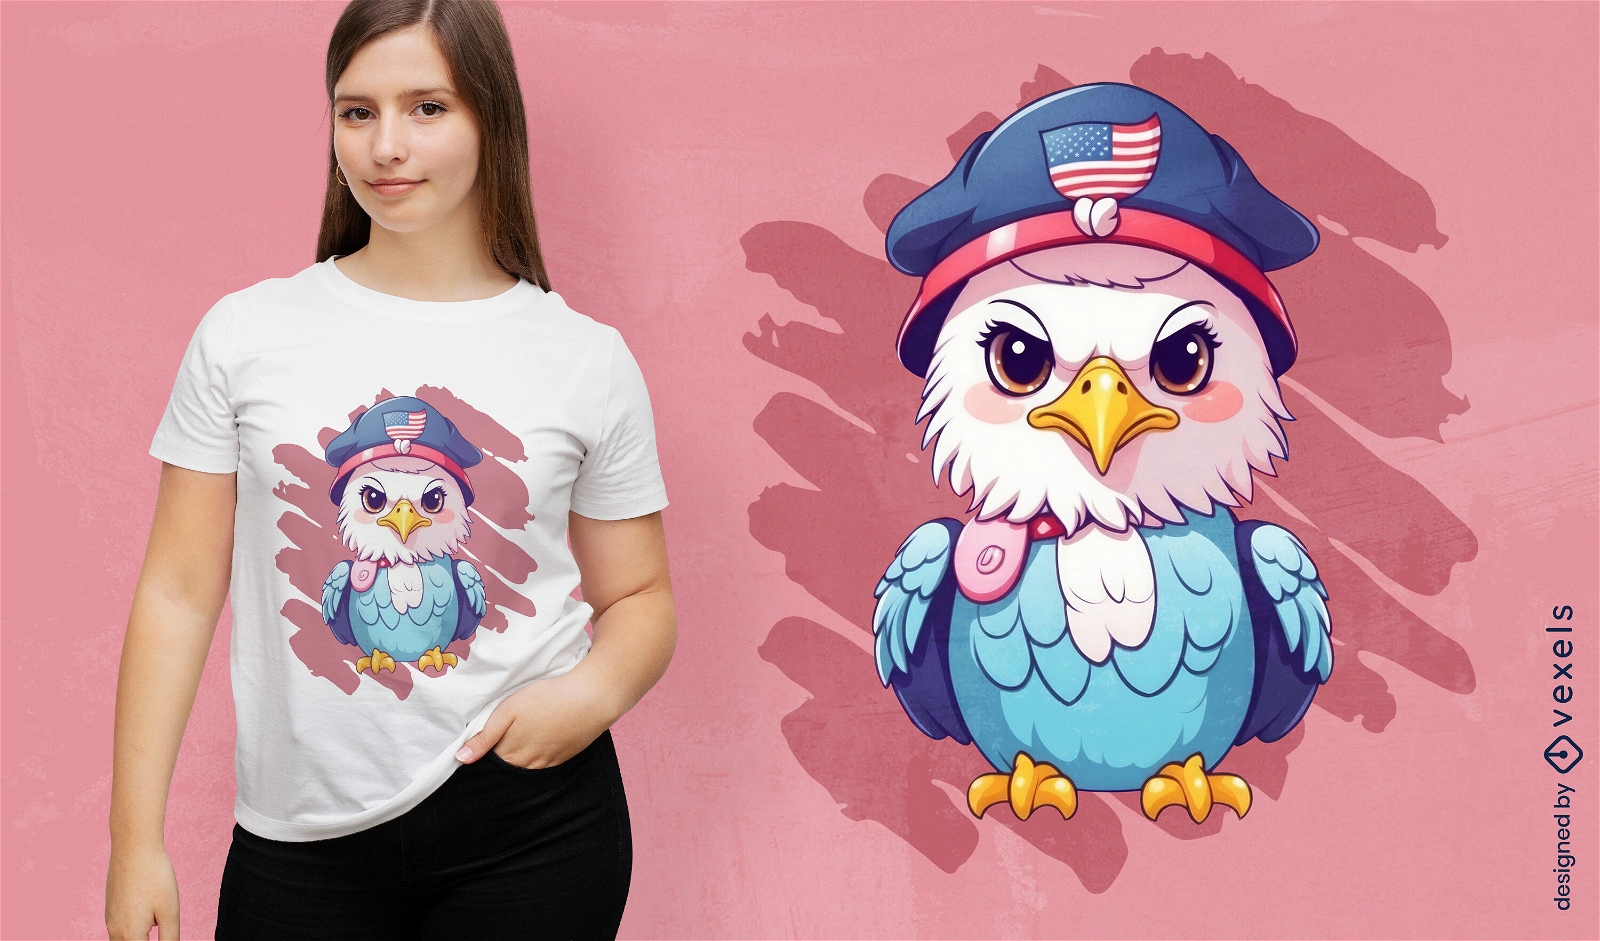 Cute patriotic eagle t-shirt design